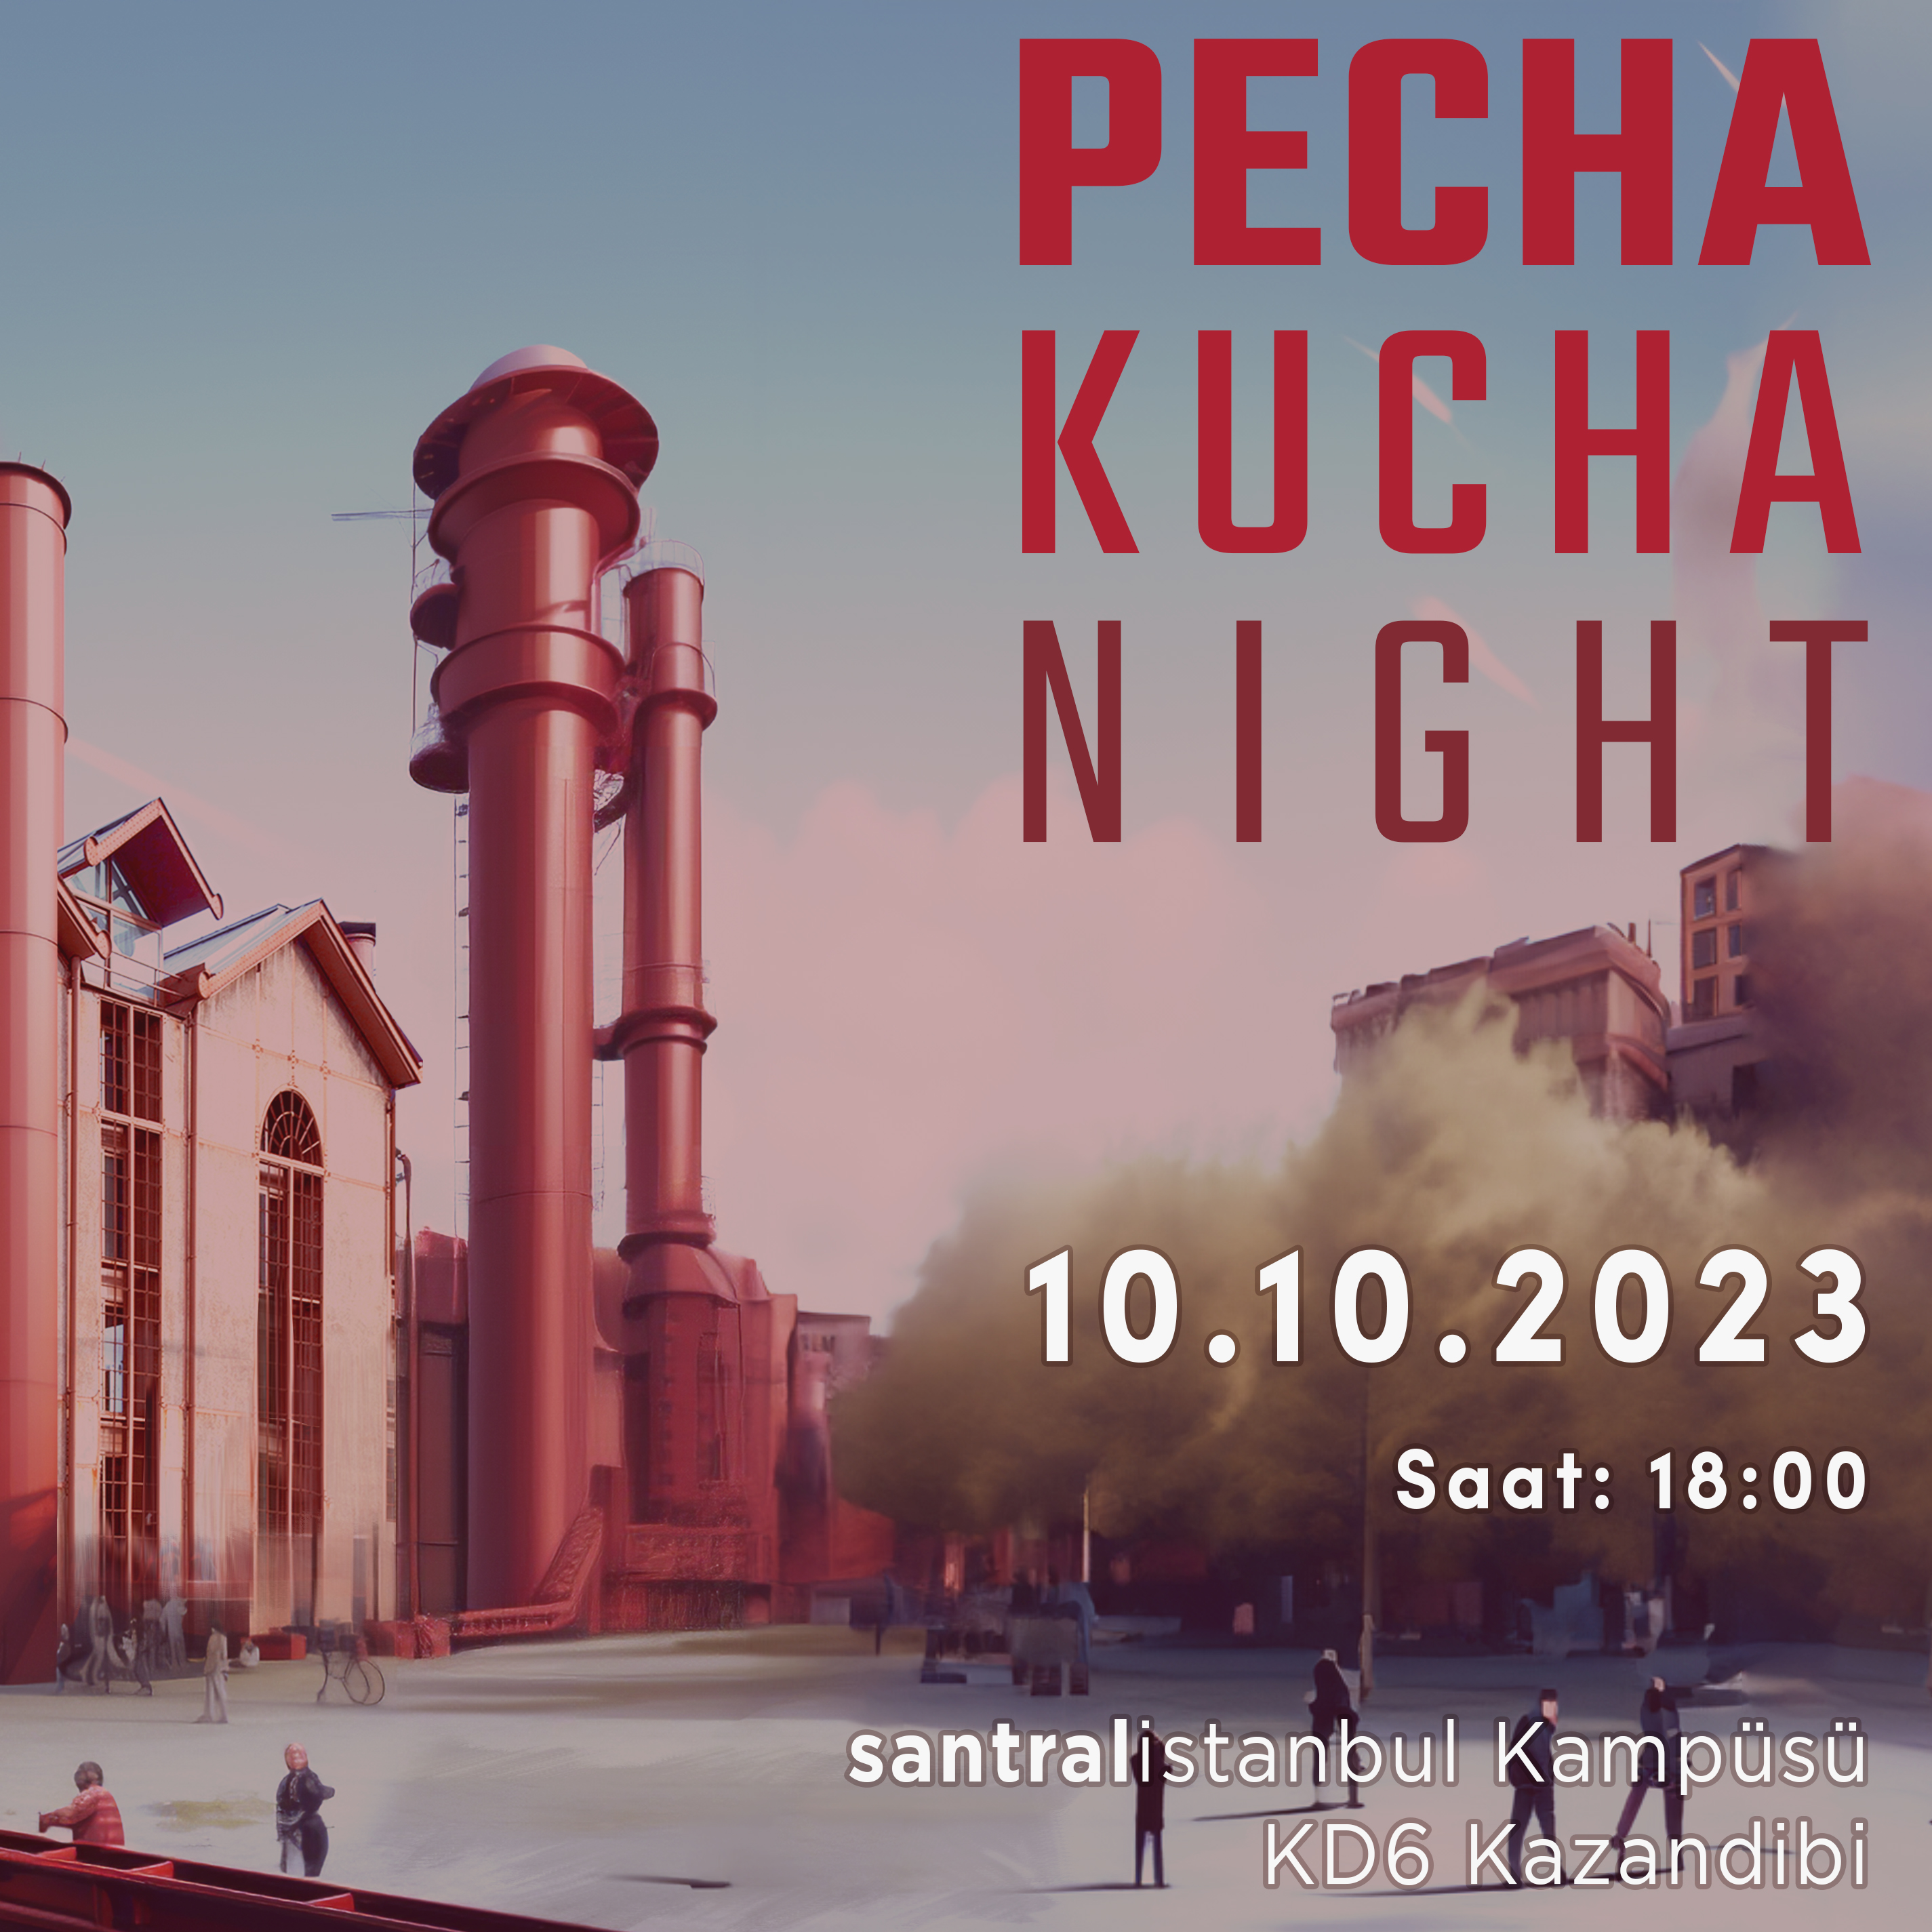 Mekan Konuşmaları No: 100 “Pecha Kucha Night”  // 10.10.2023 @18.00, Kazandibi